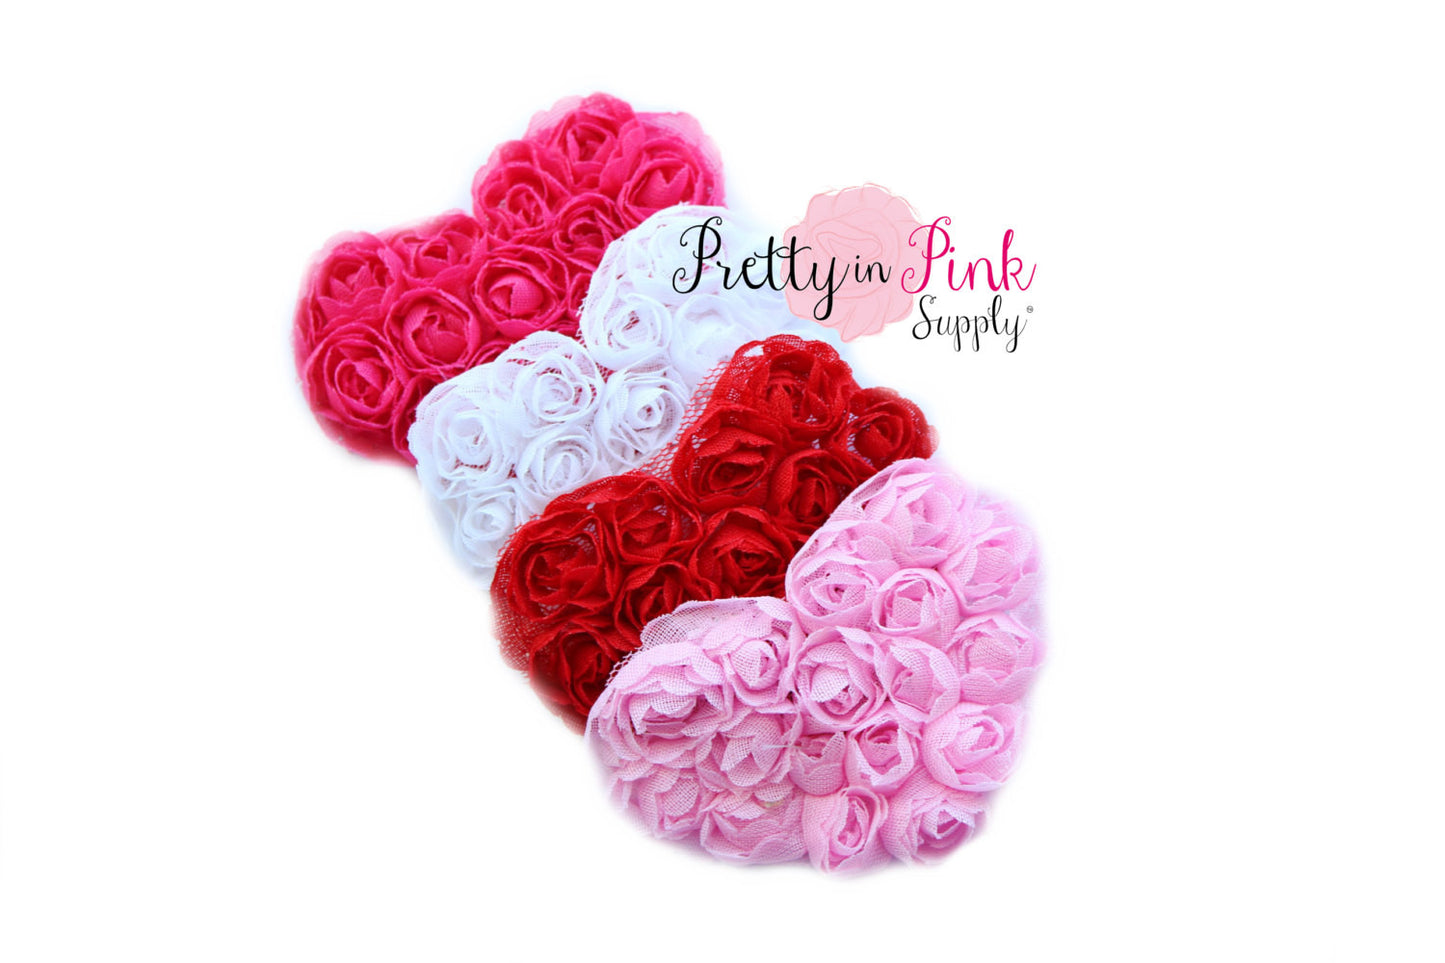 New Rosette Chiffon Hearts - Pretty in Pink Supply